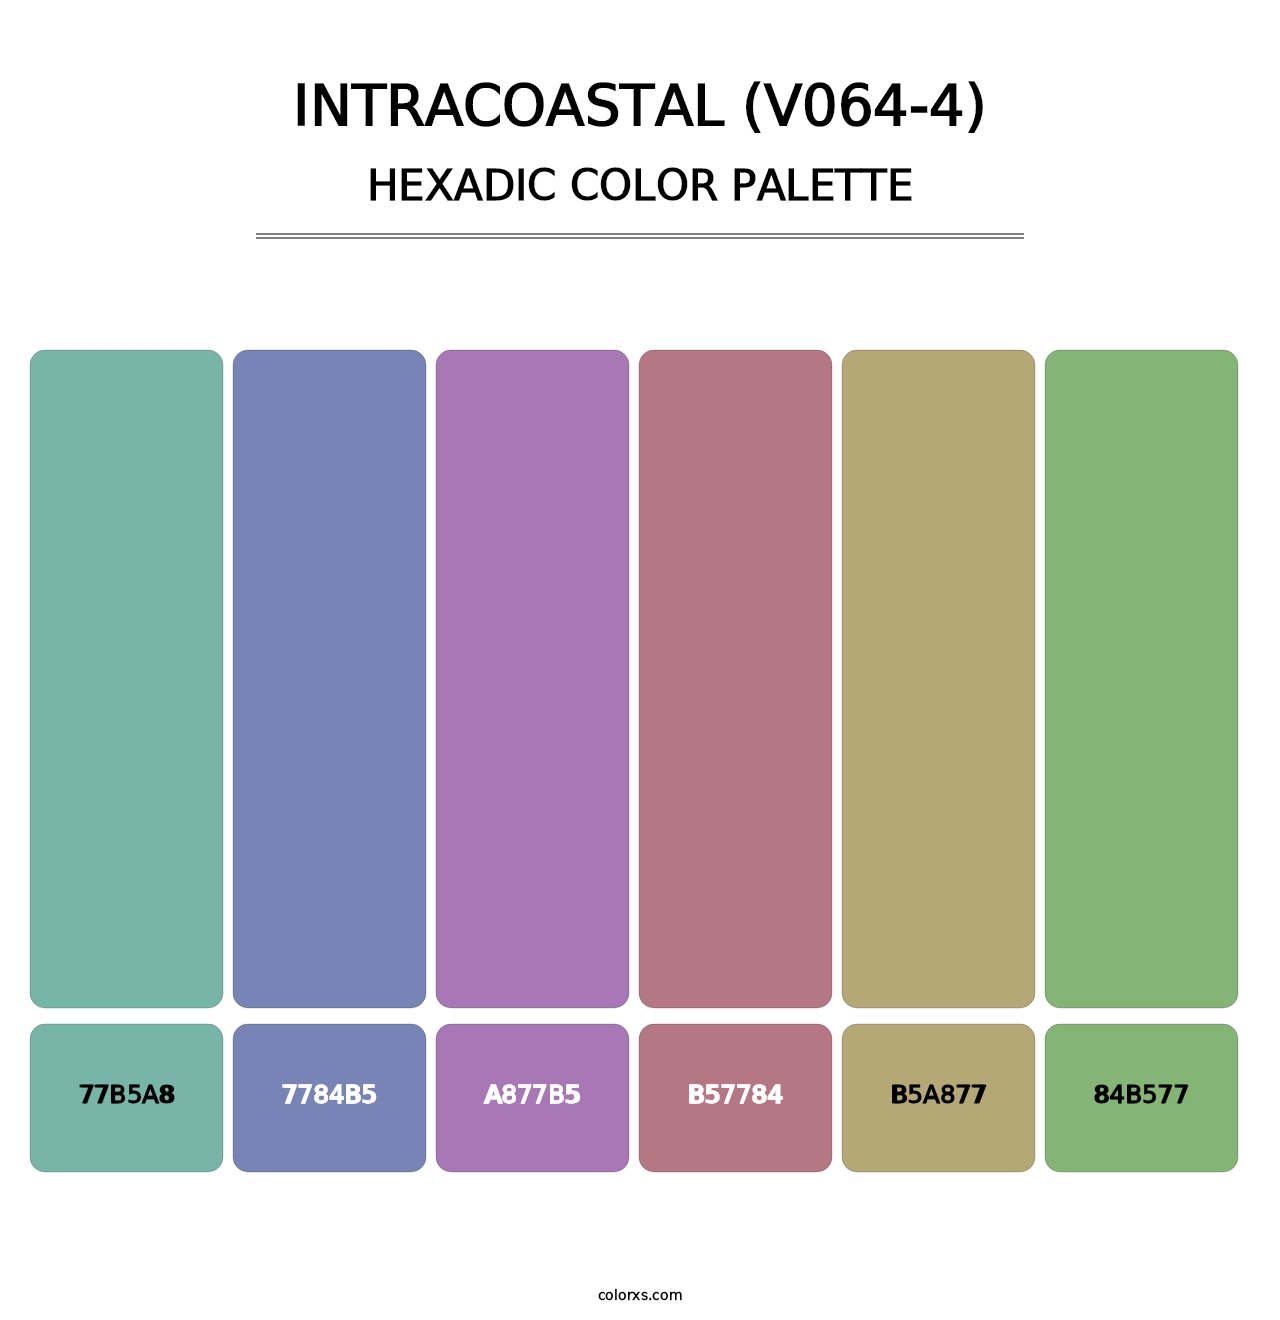 Intracoastal (V064-4) - Hexadic Color Palette